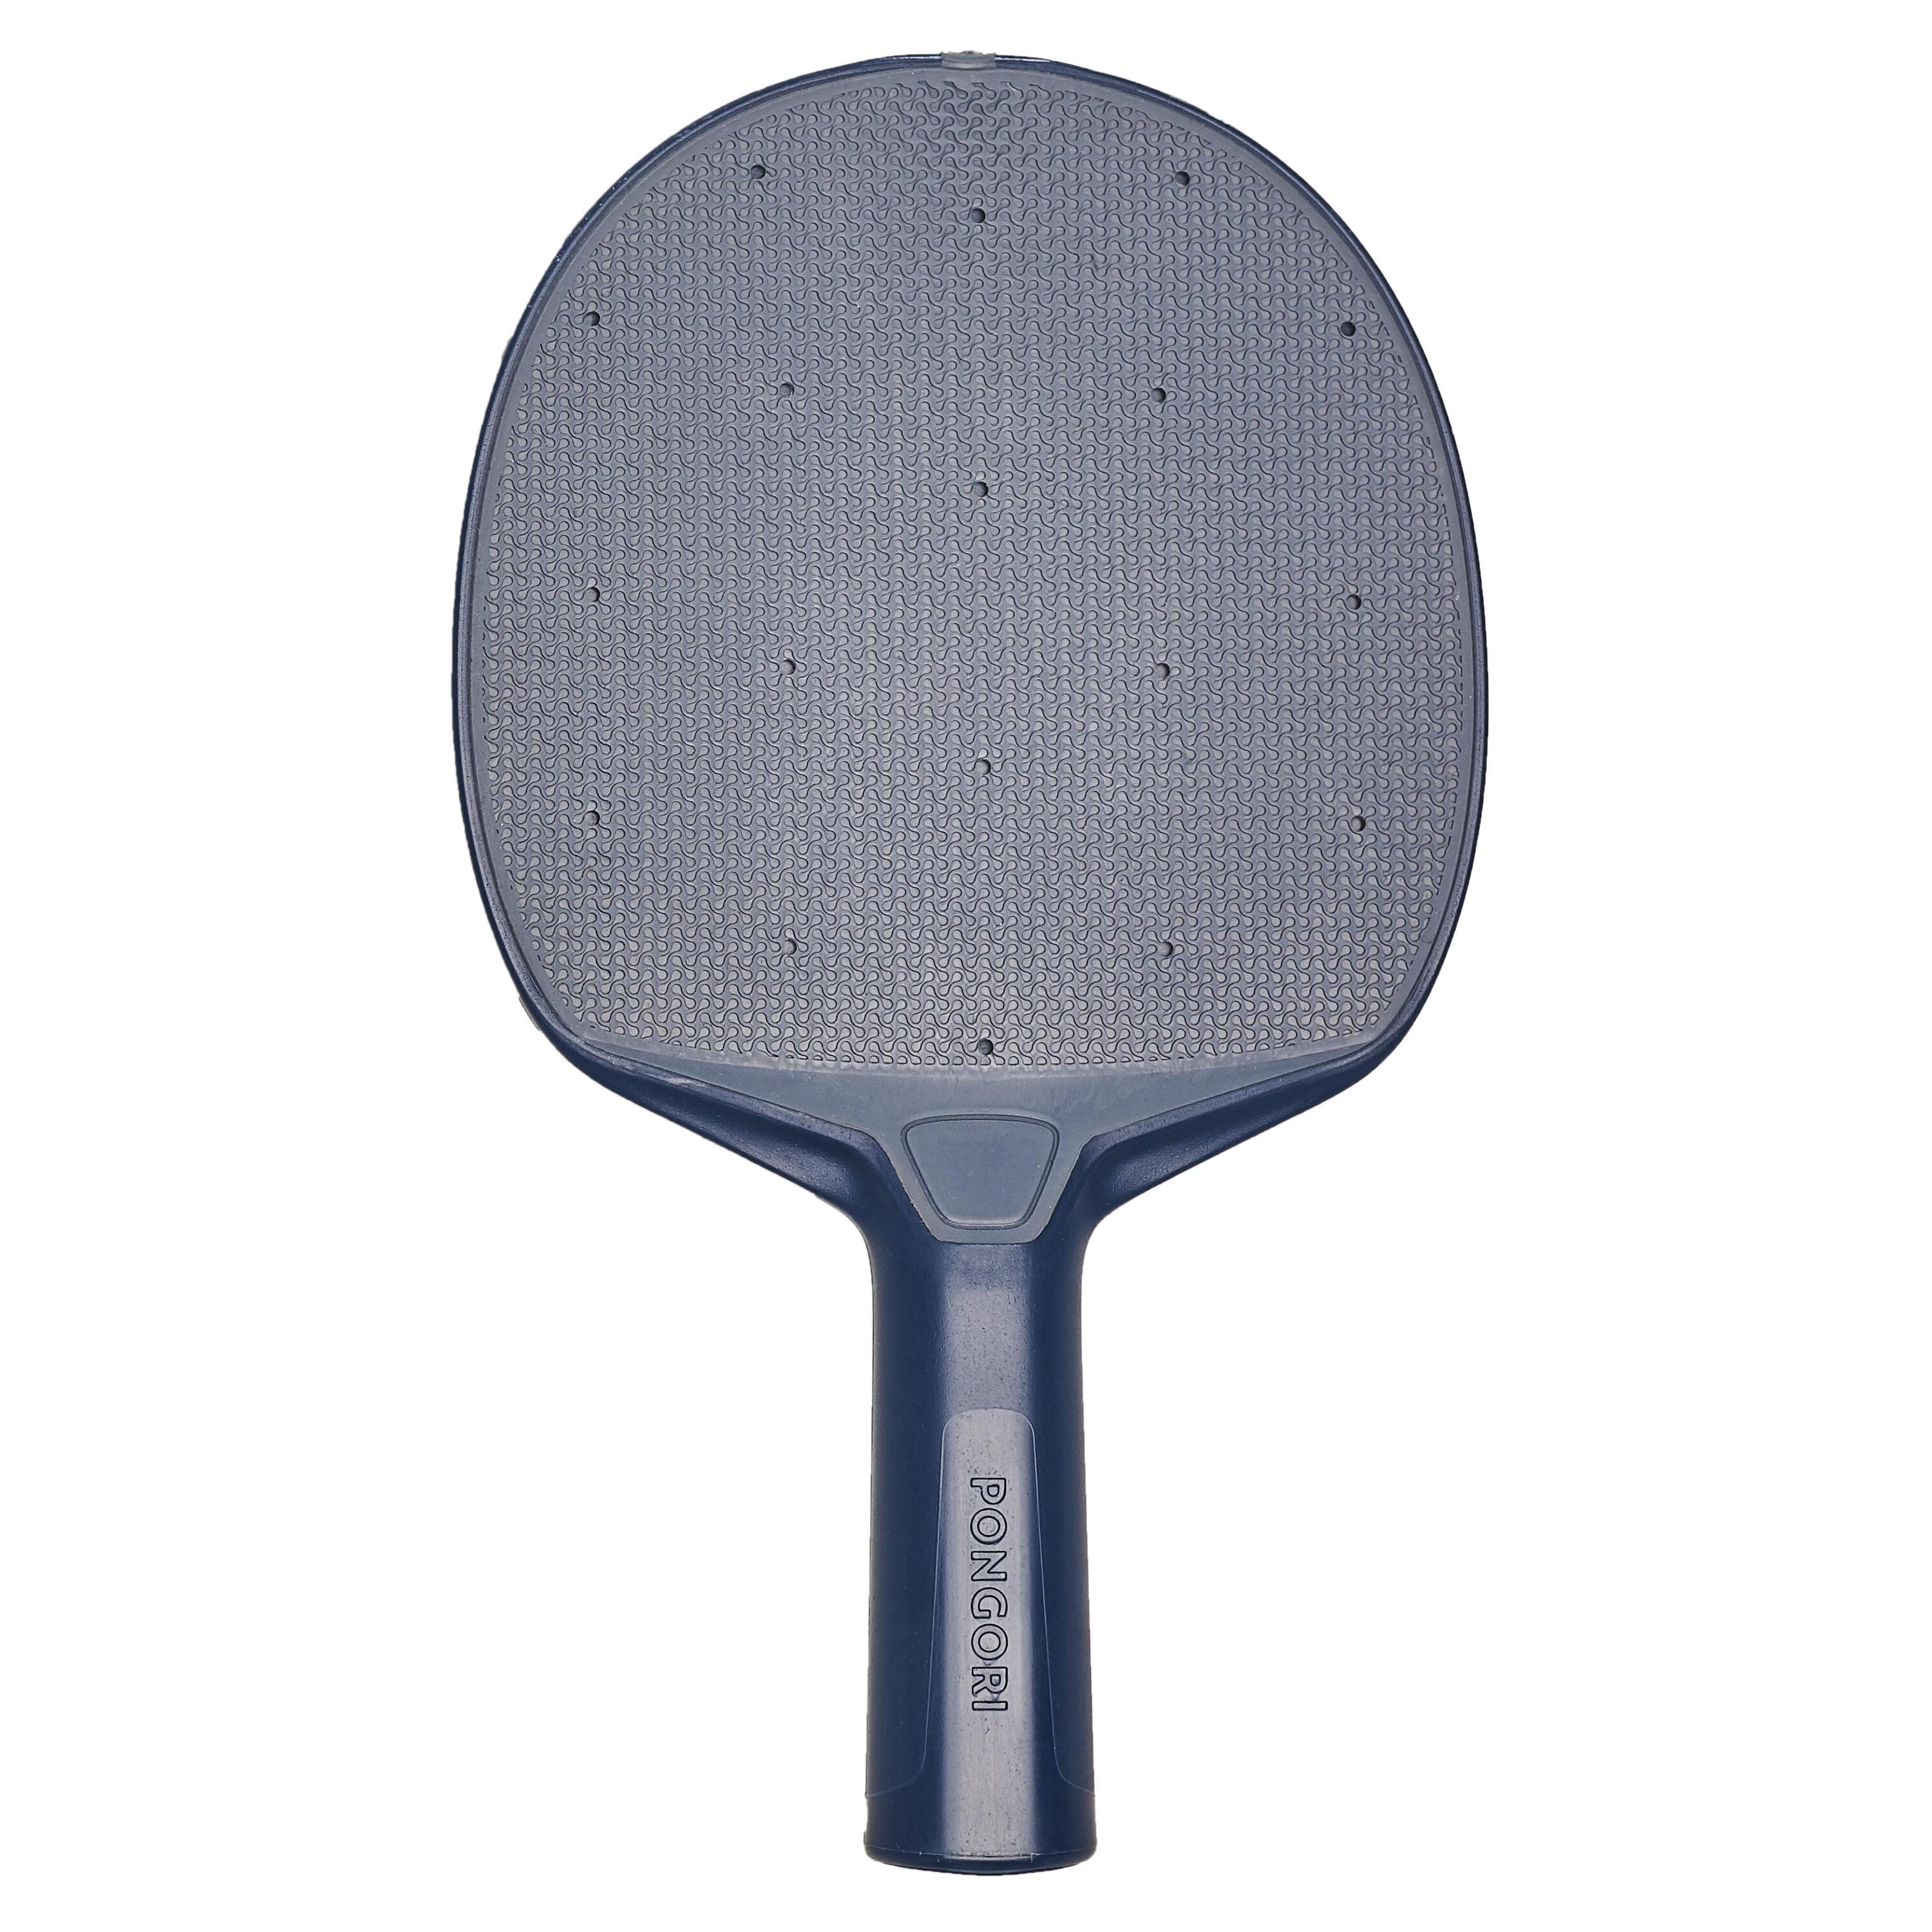 PONGORI Table Tennis Robust Bat PPR 100 O - Grey